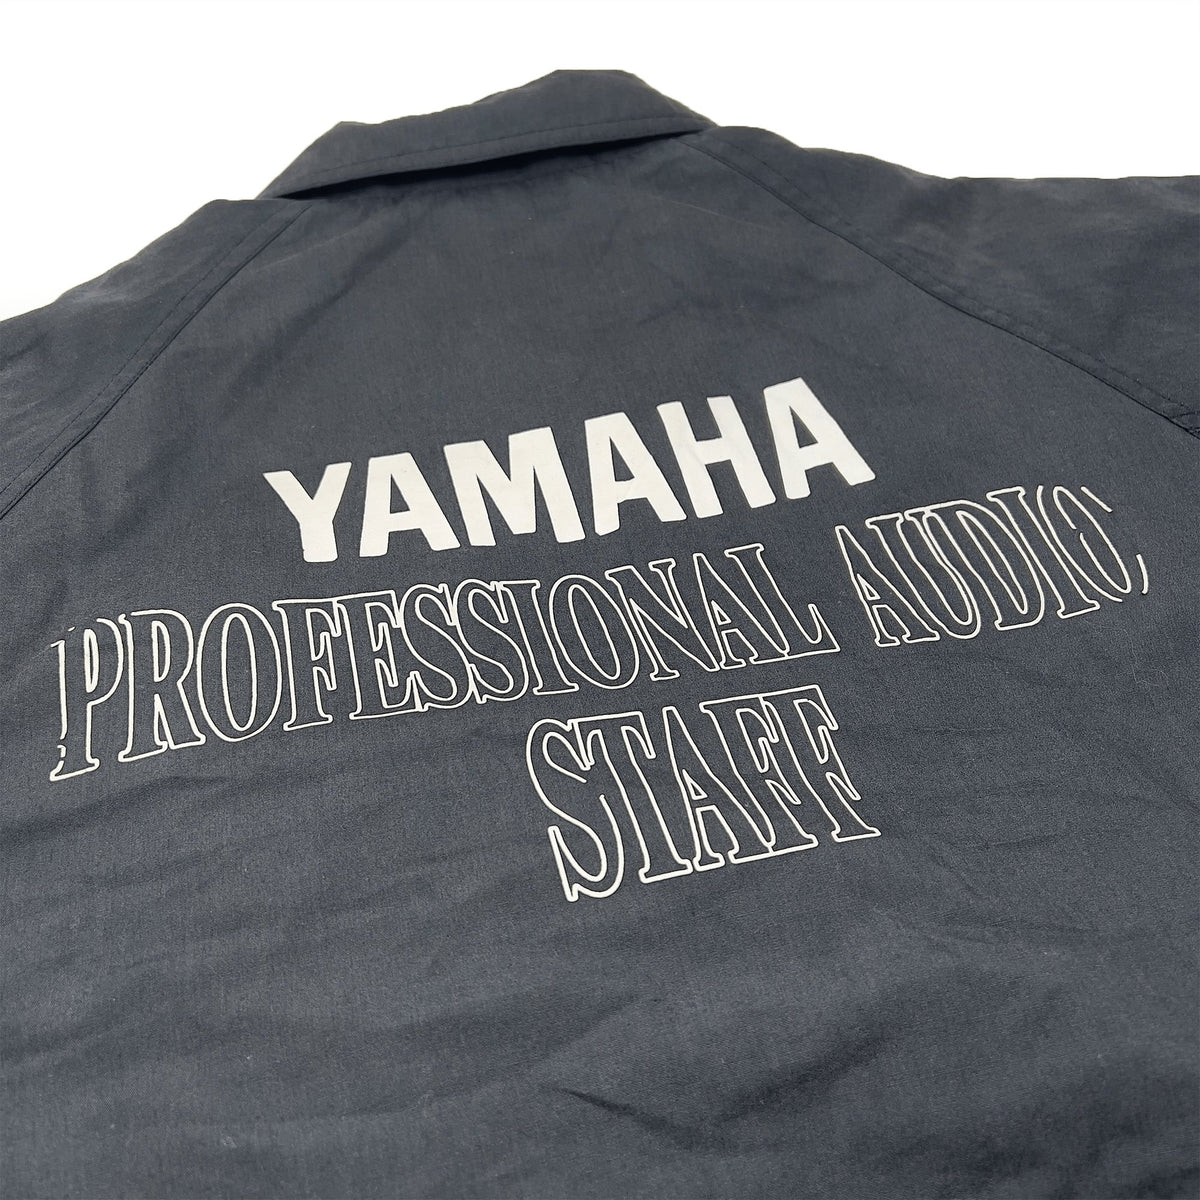 Vintage JDM Japan Yamaha Professional Audio Staff Jacket Black - Sugoi JDM